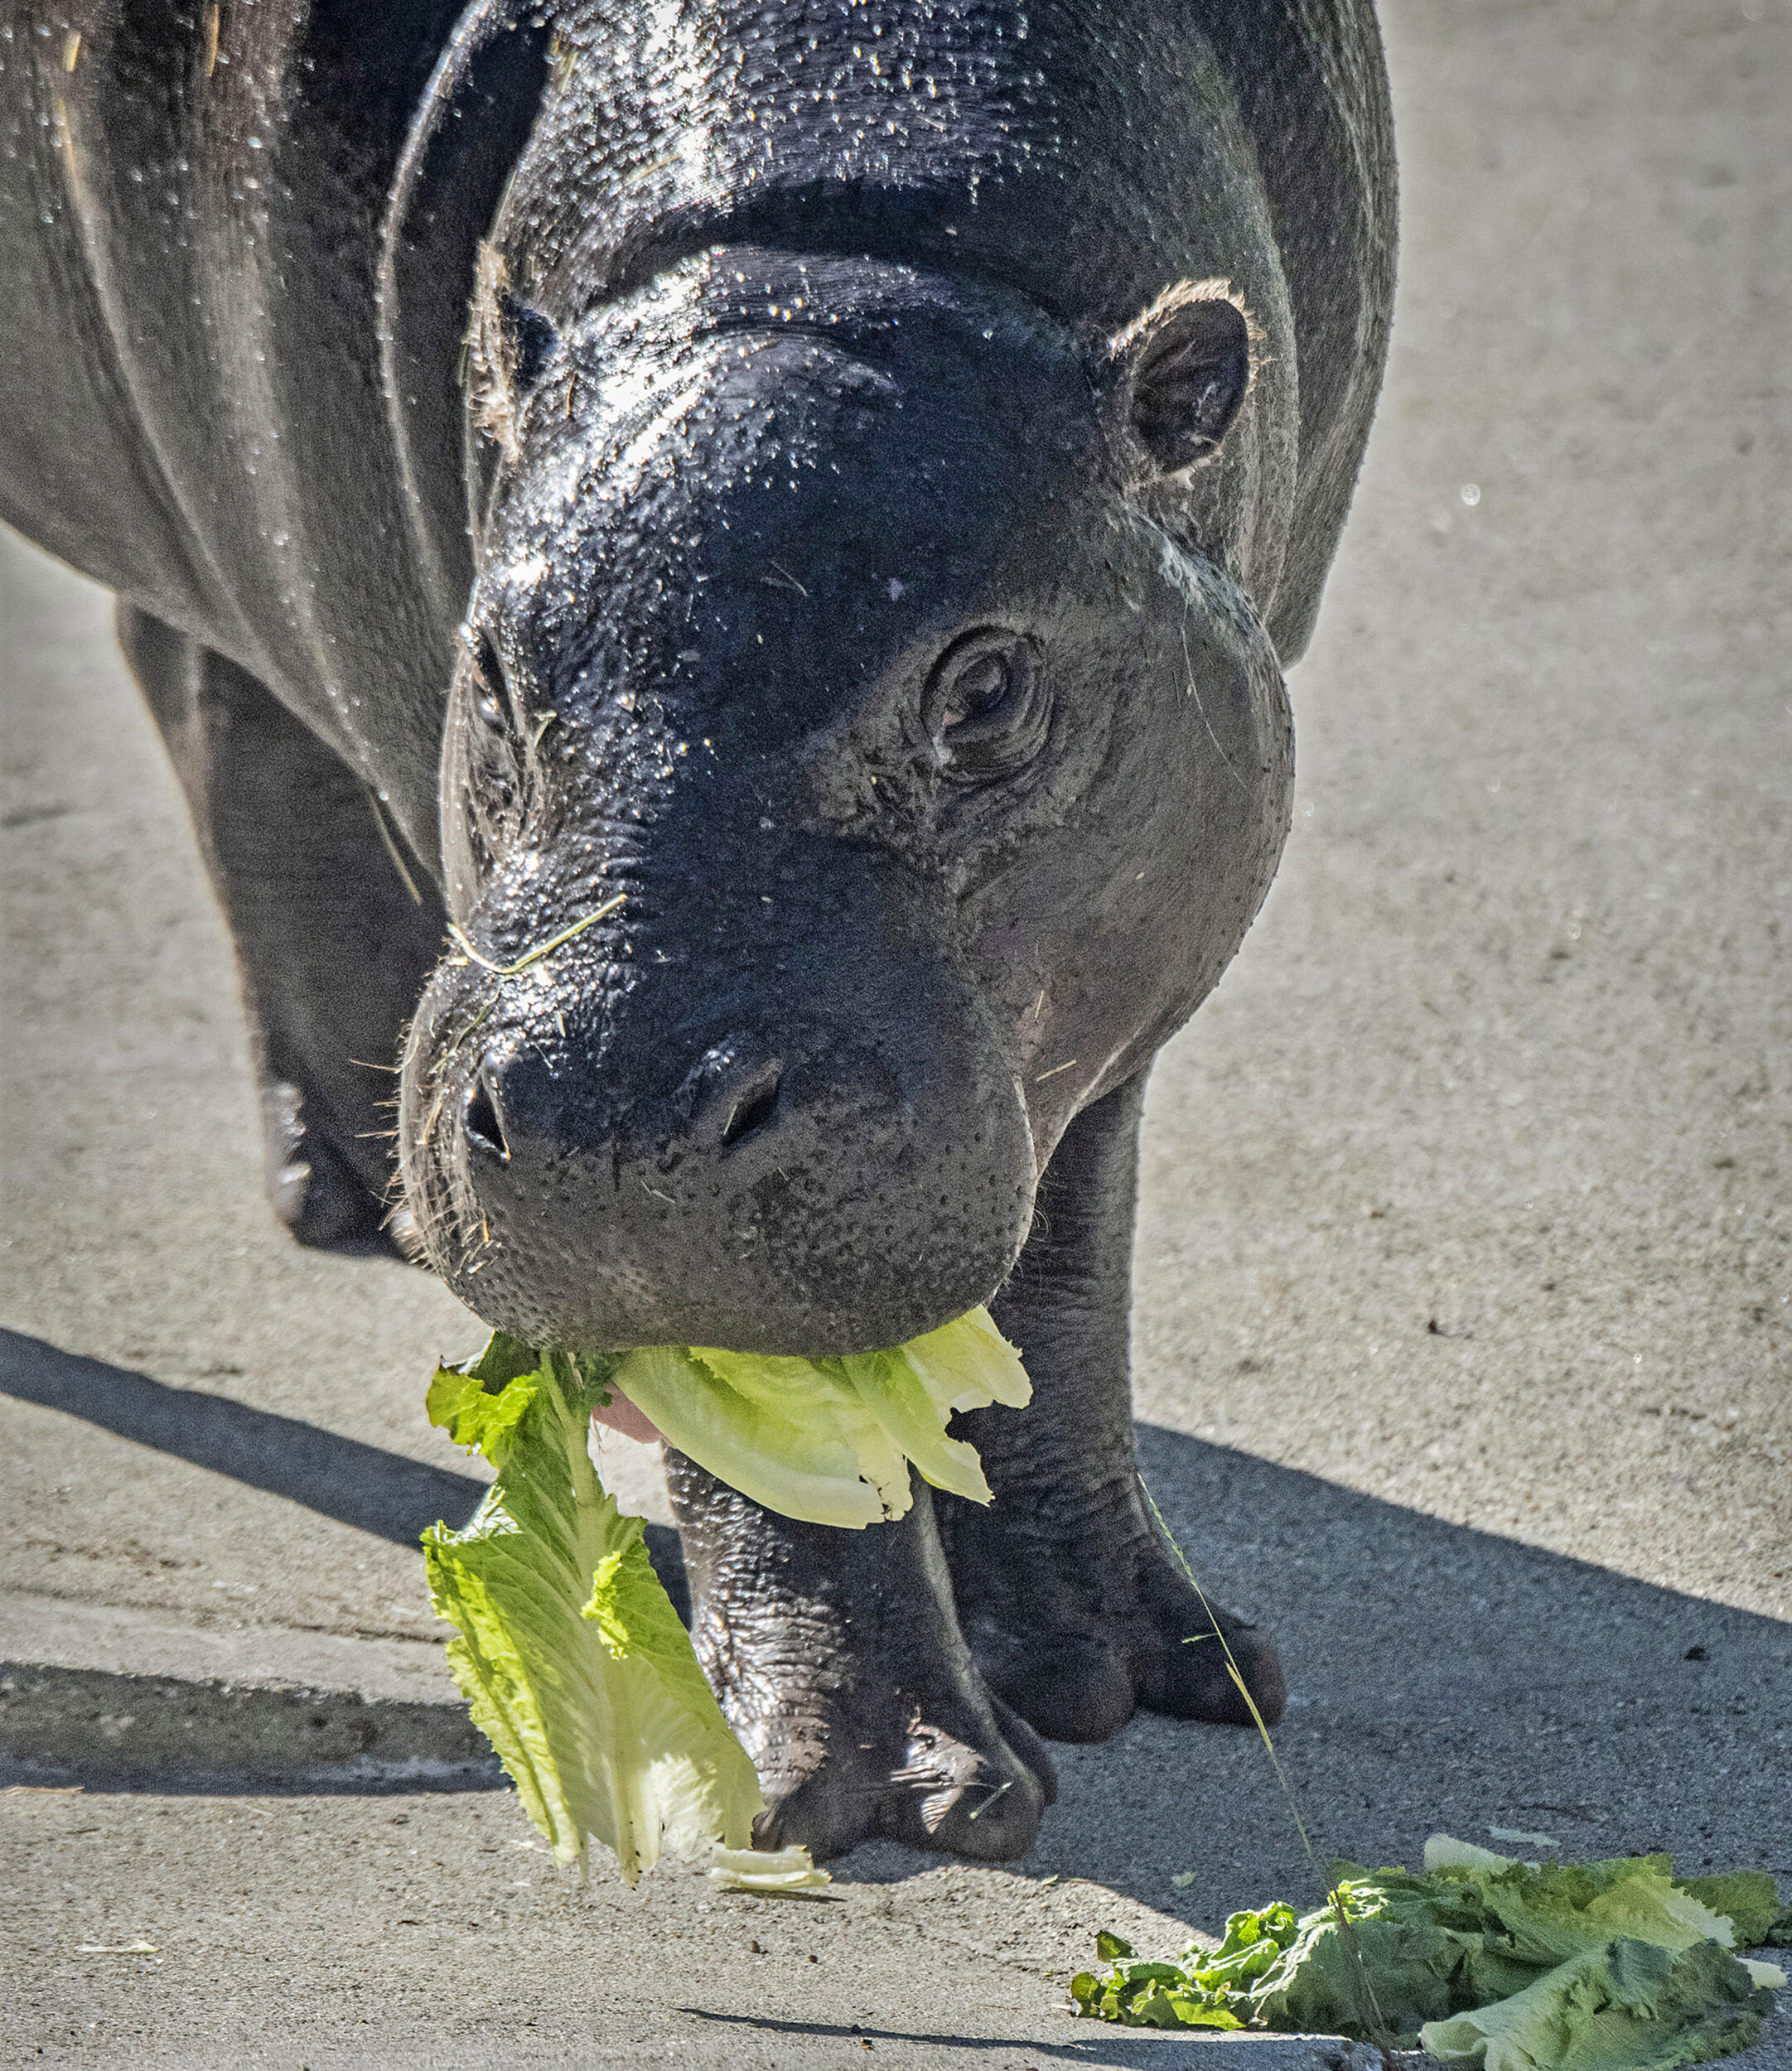 A hippo eating lettuce.